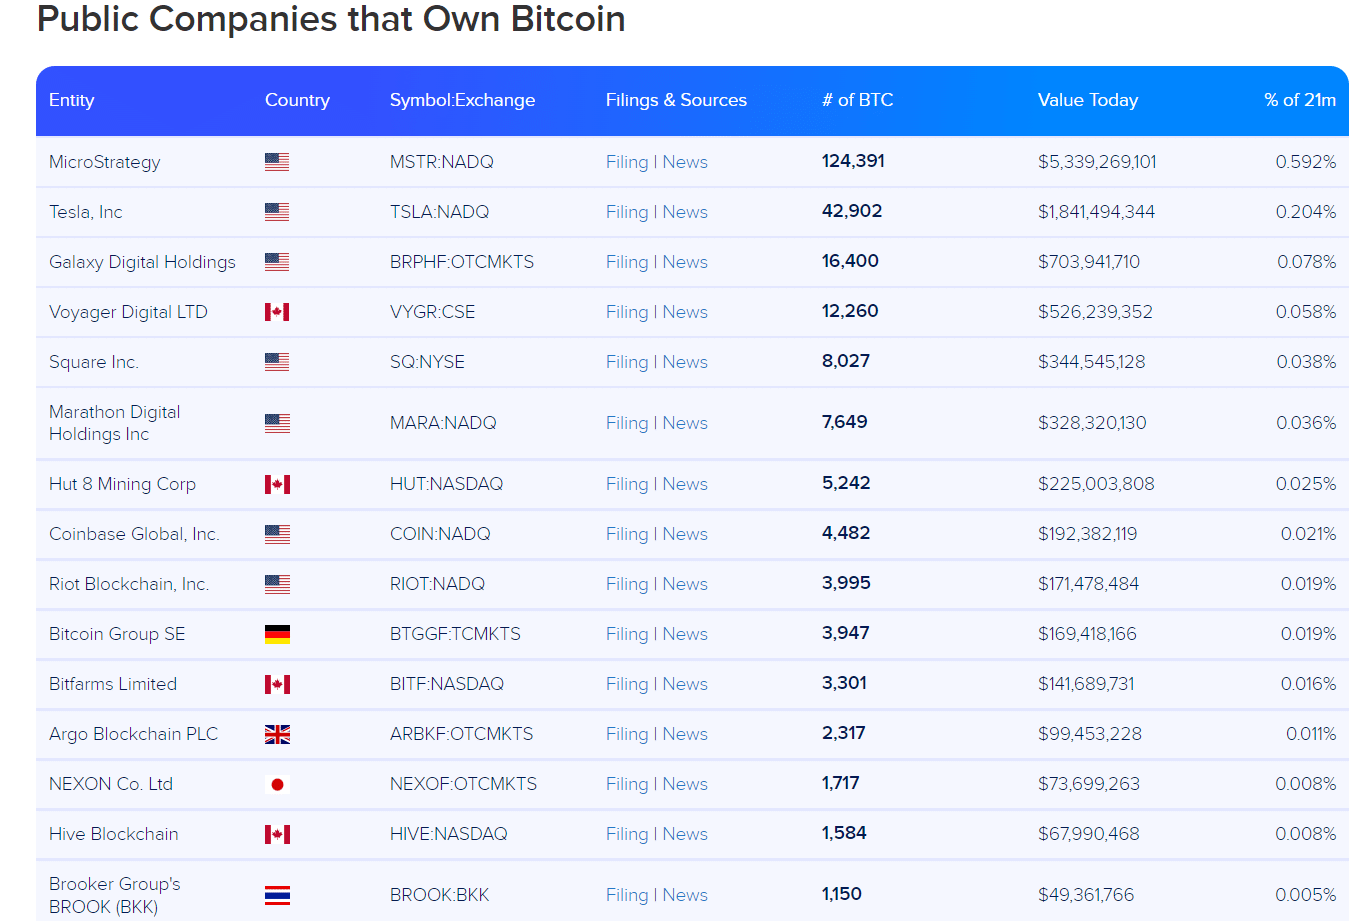 Screenshot Source - Bitcoin Treasuries(Public Companies that Own Bitcoin)